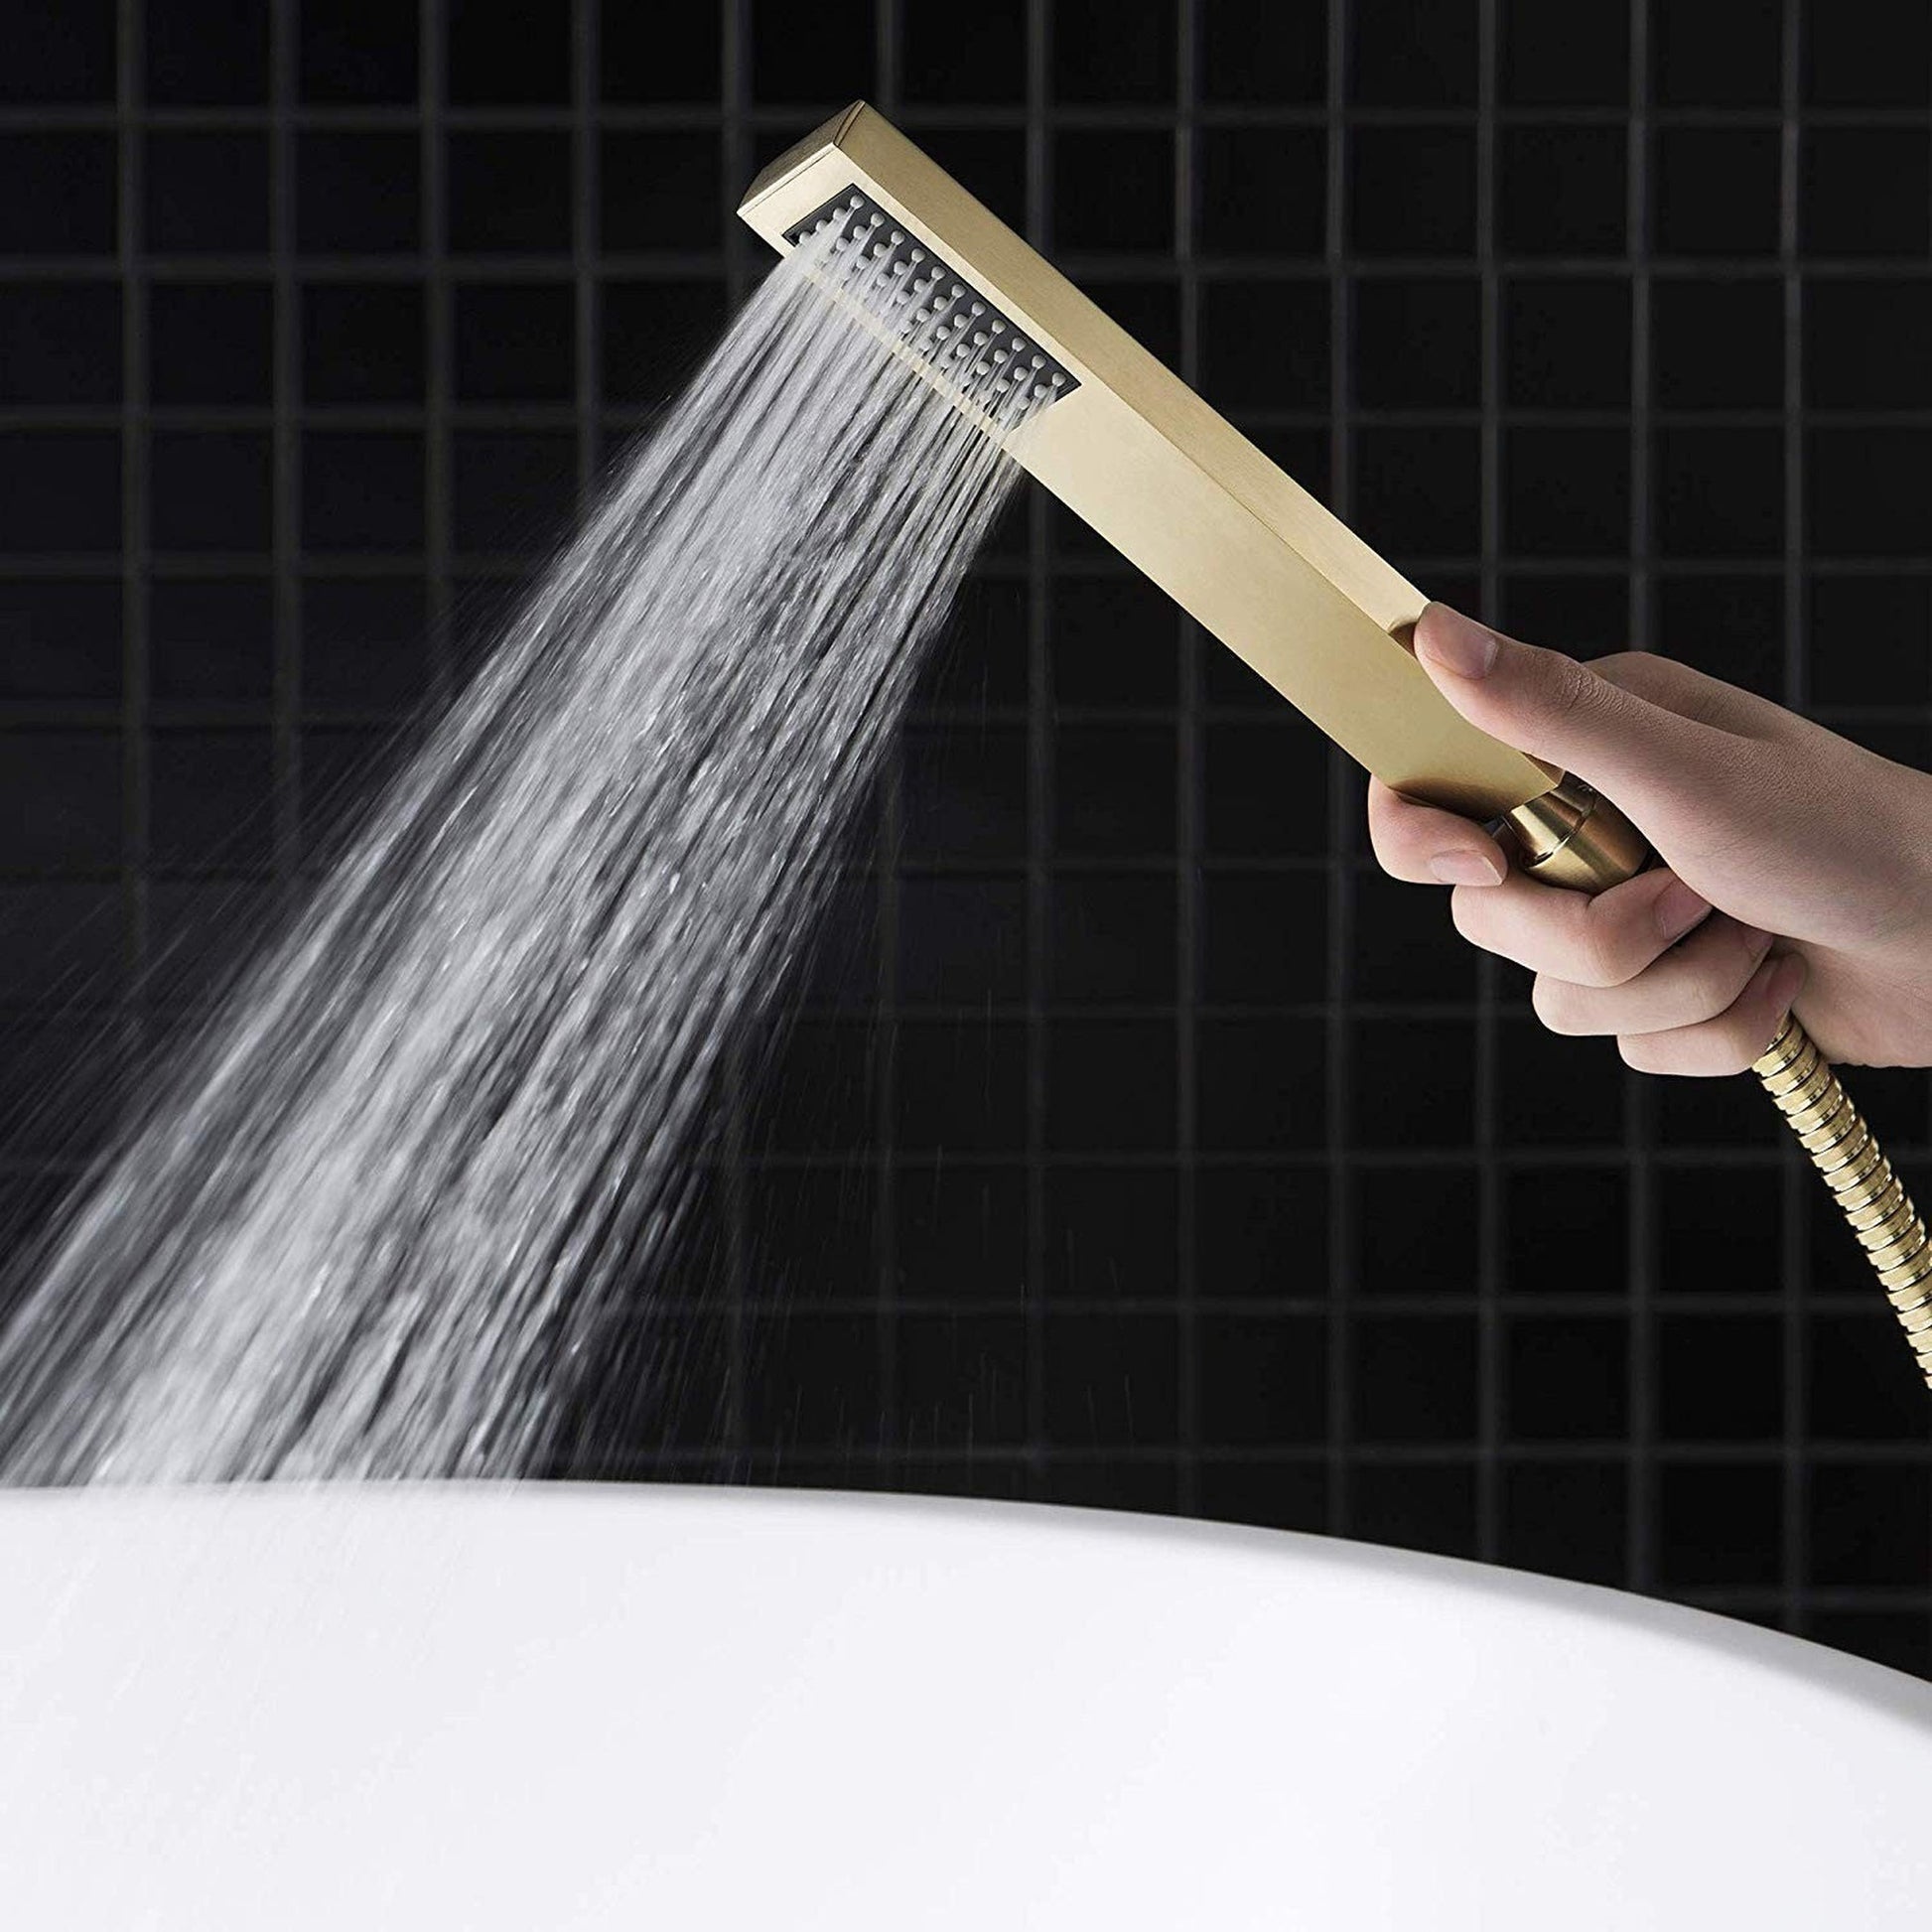 WoodBridge F0008BG Brushed Gold Contemporary Single Handle Floor Mount Freestanding Tub Filler Faucet With Hand Shower